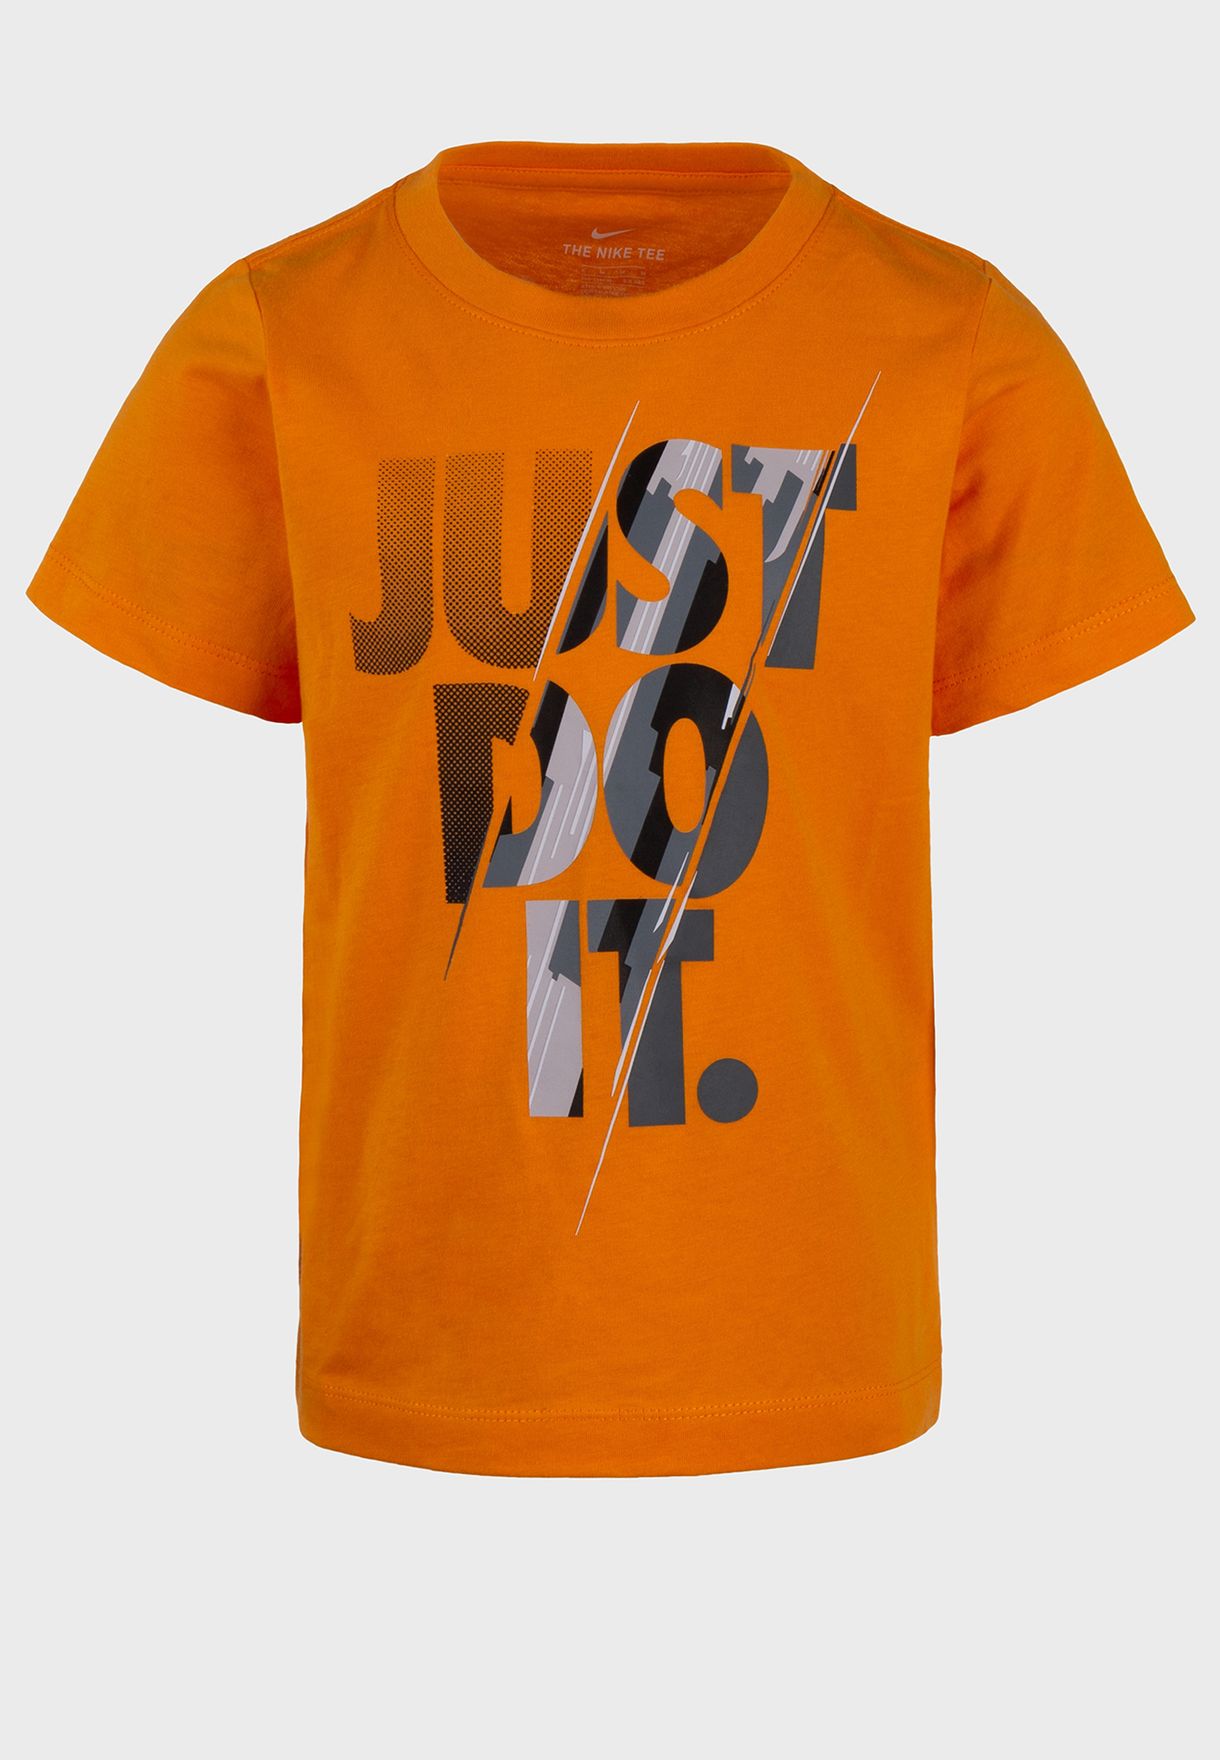 nike just do it orange t shirt